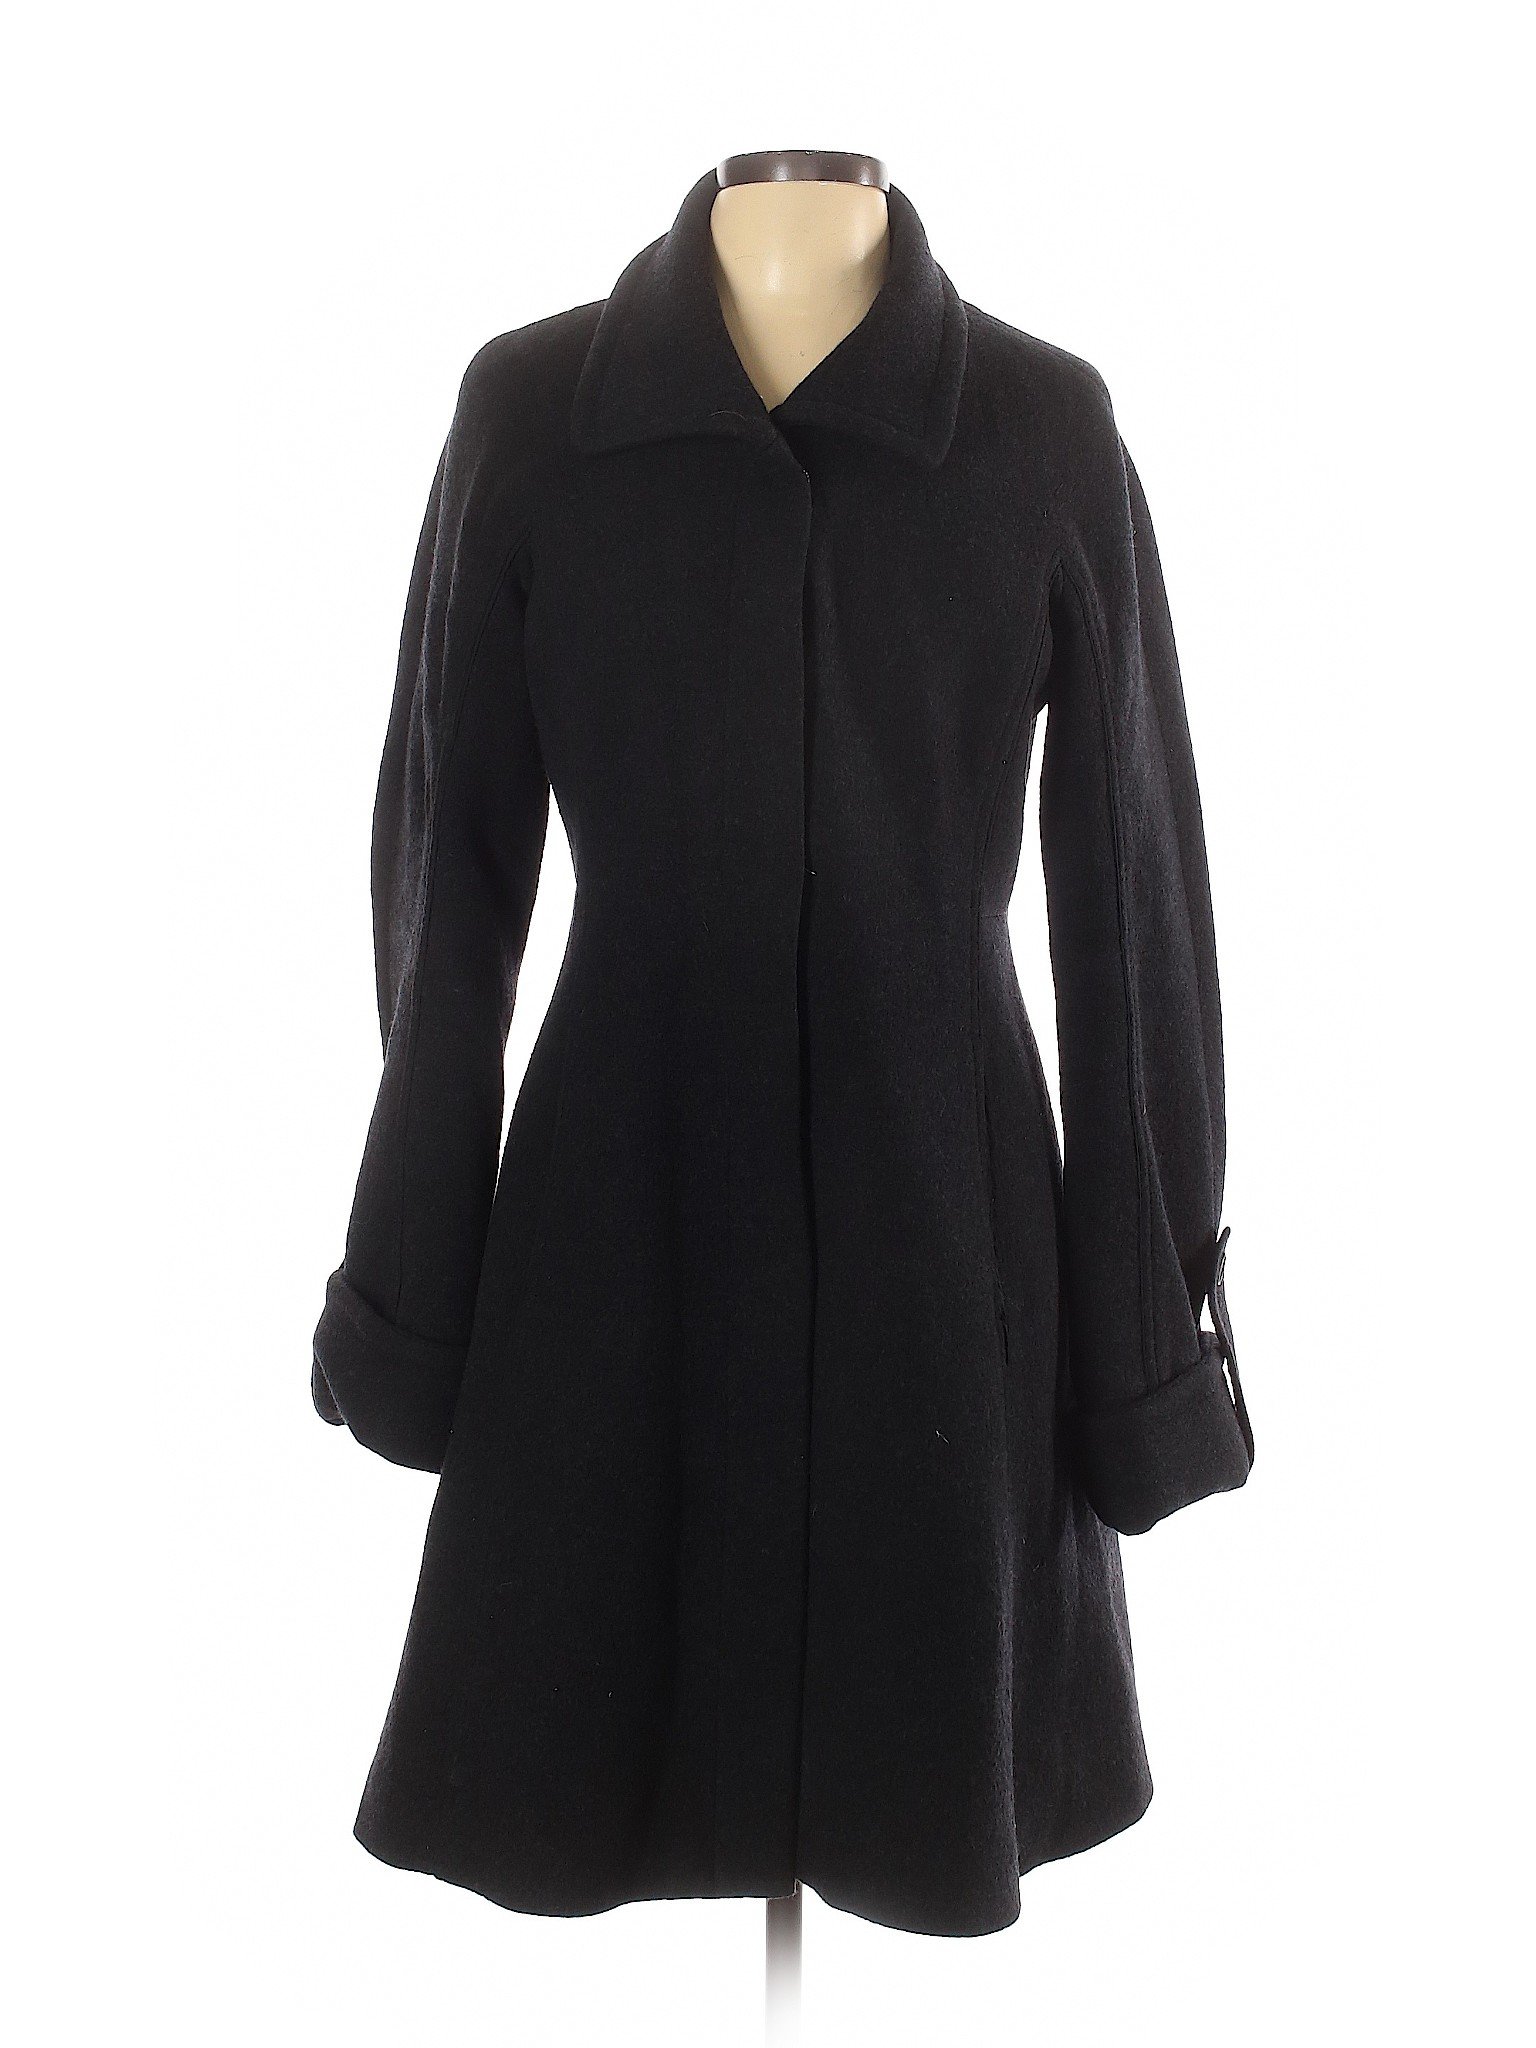 Theory Women Black Coat L | eBay